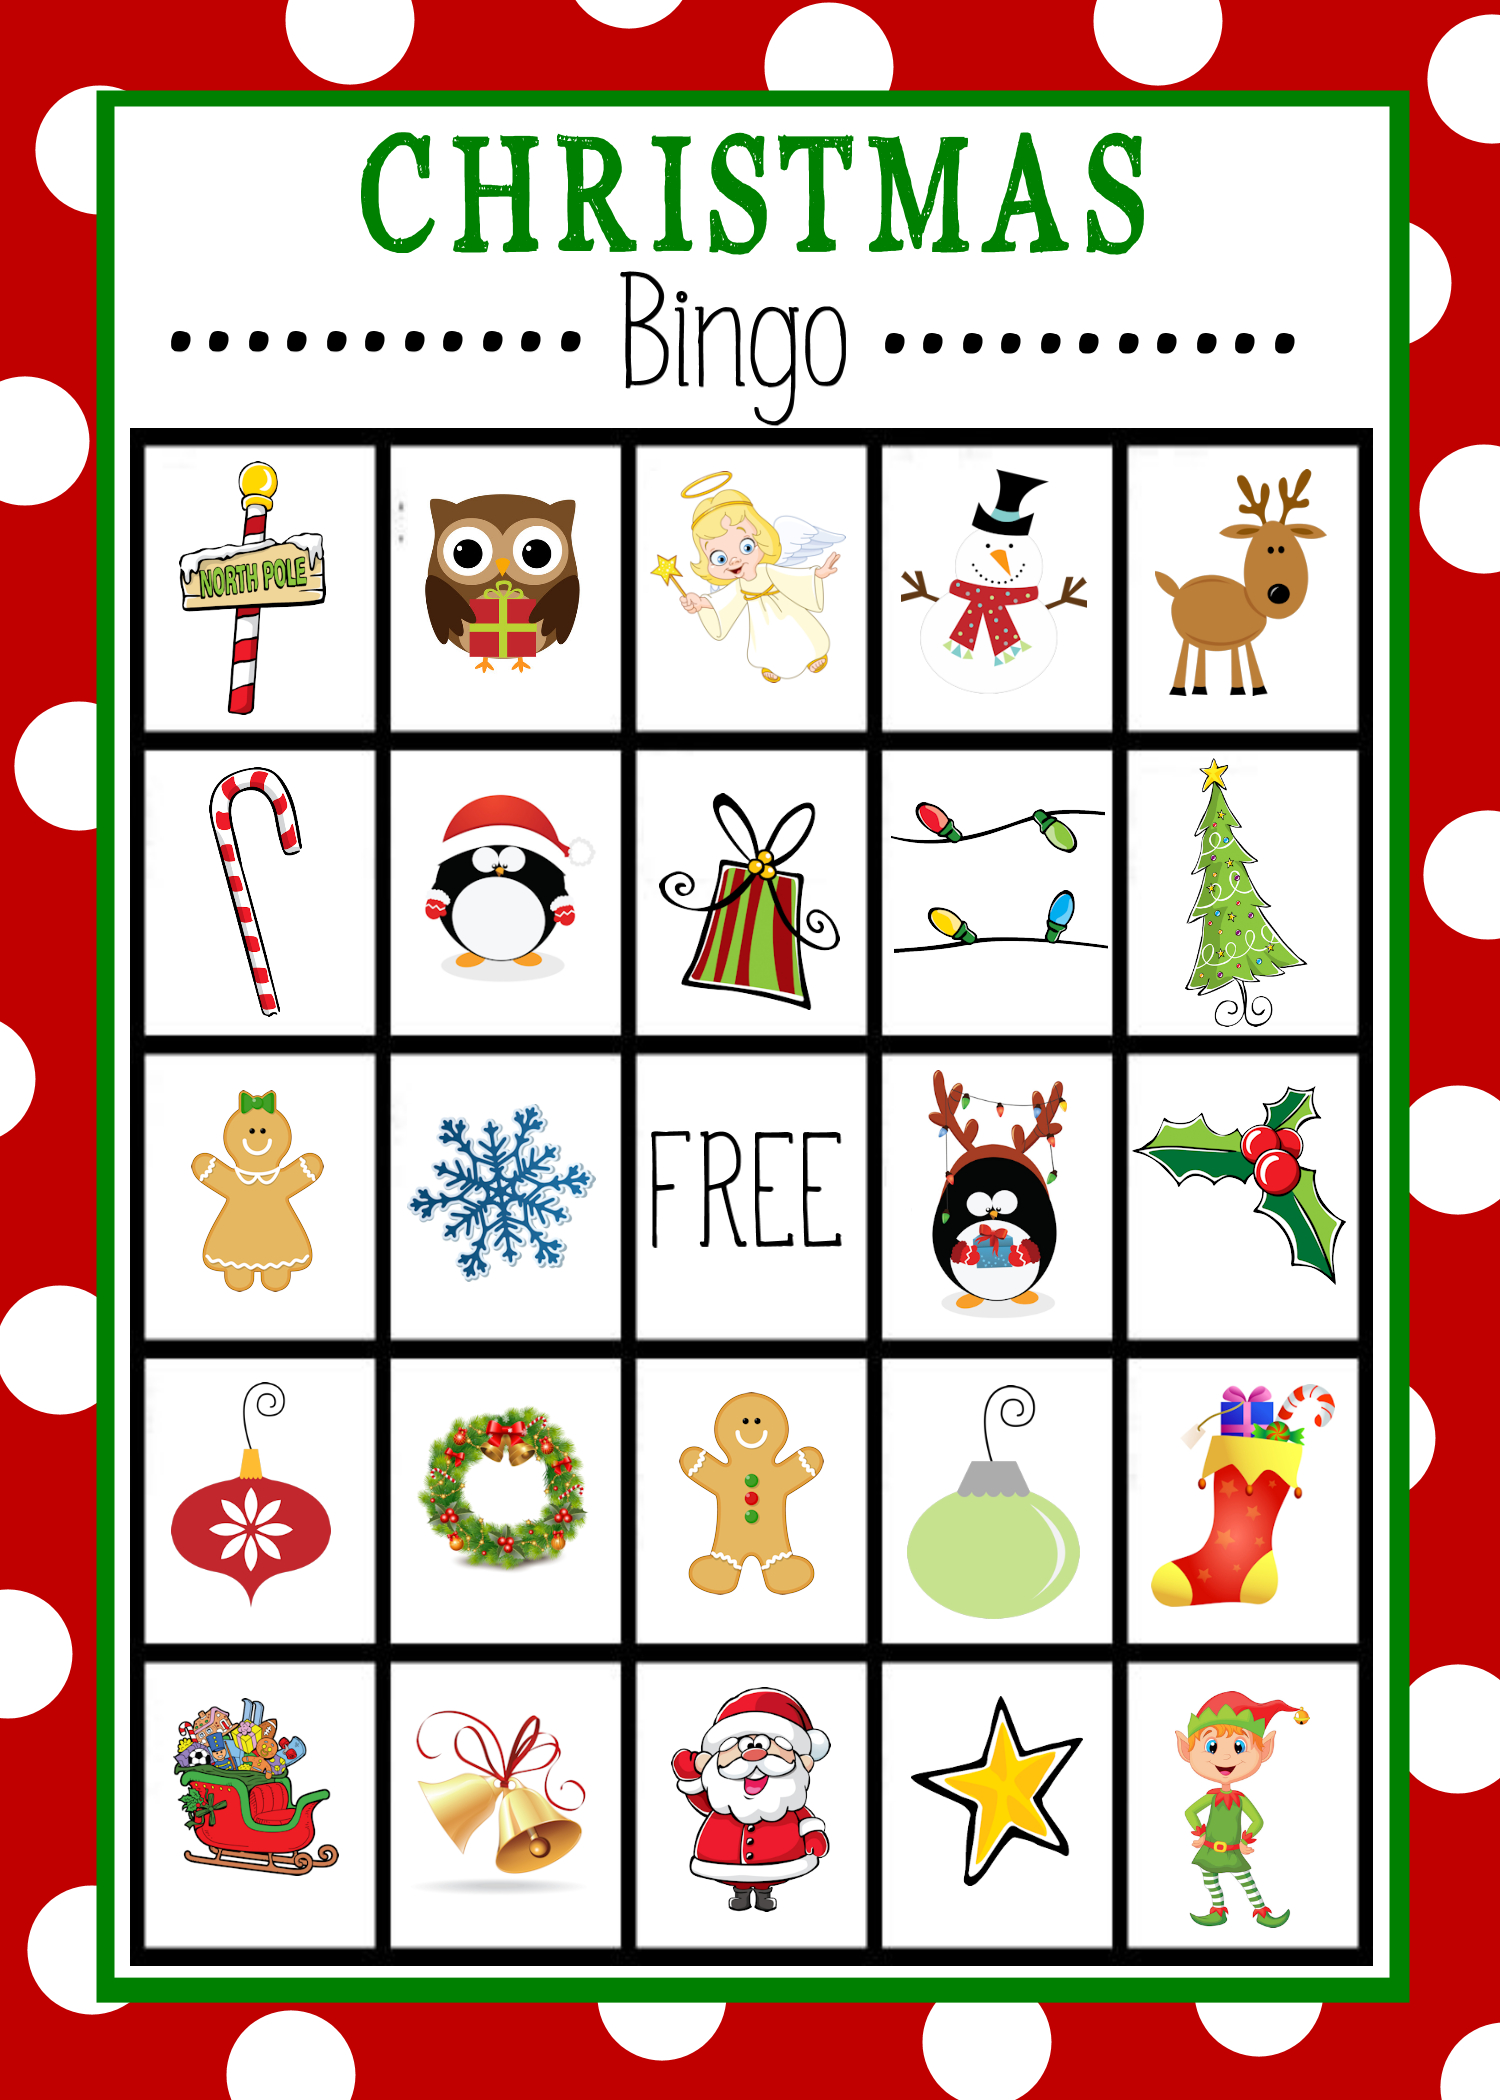 Free Printable Christmas Bingo Game - Kerstbingo, Kerst